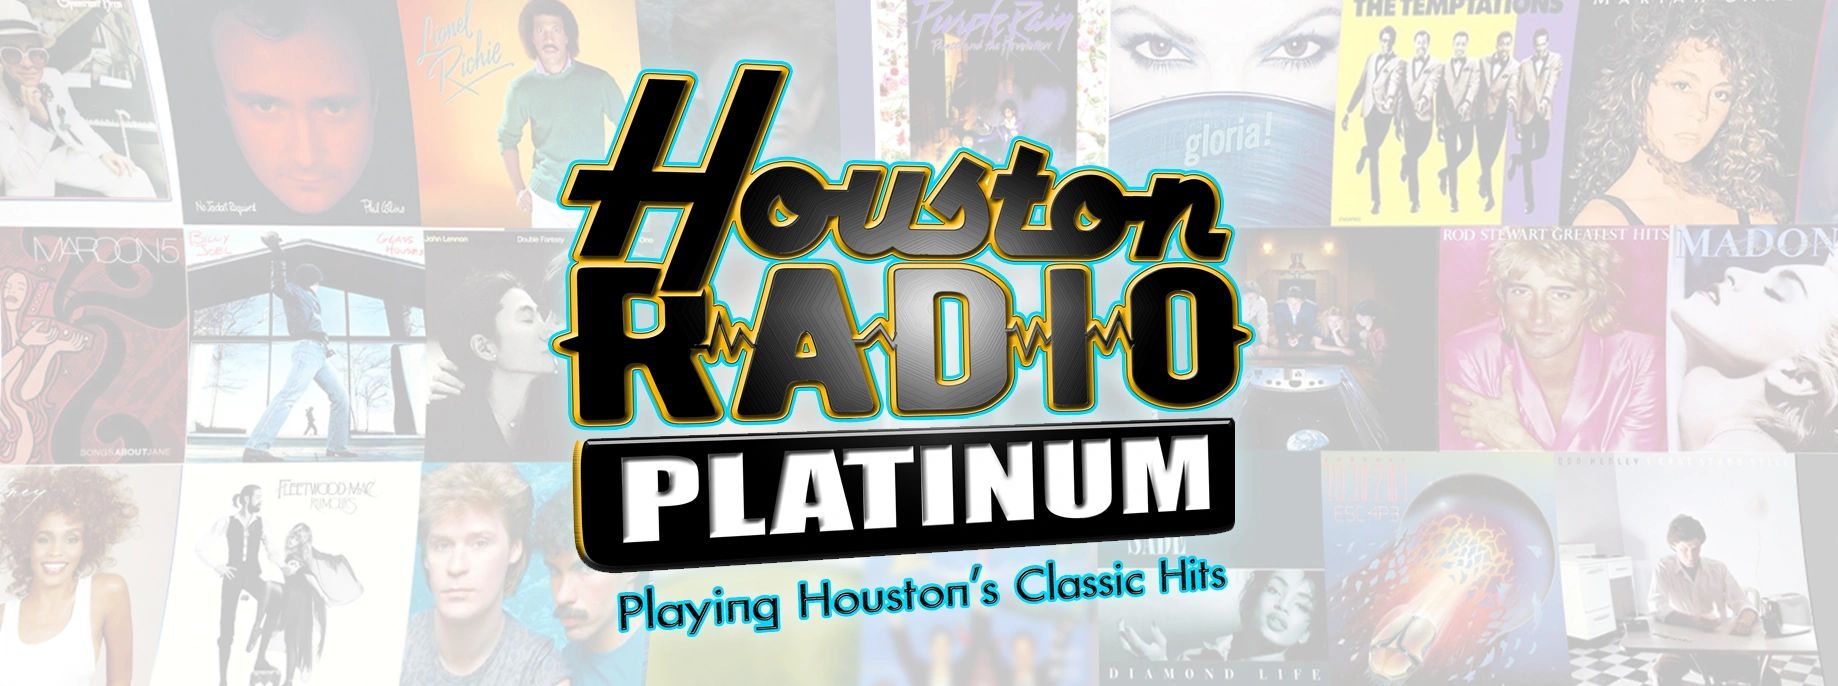 Houston Radio Platinum - Playing Houston's Classic Hits